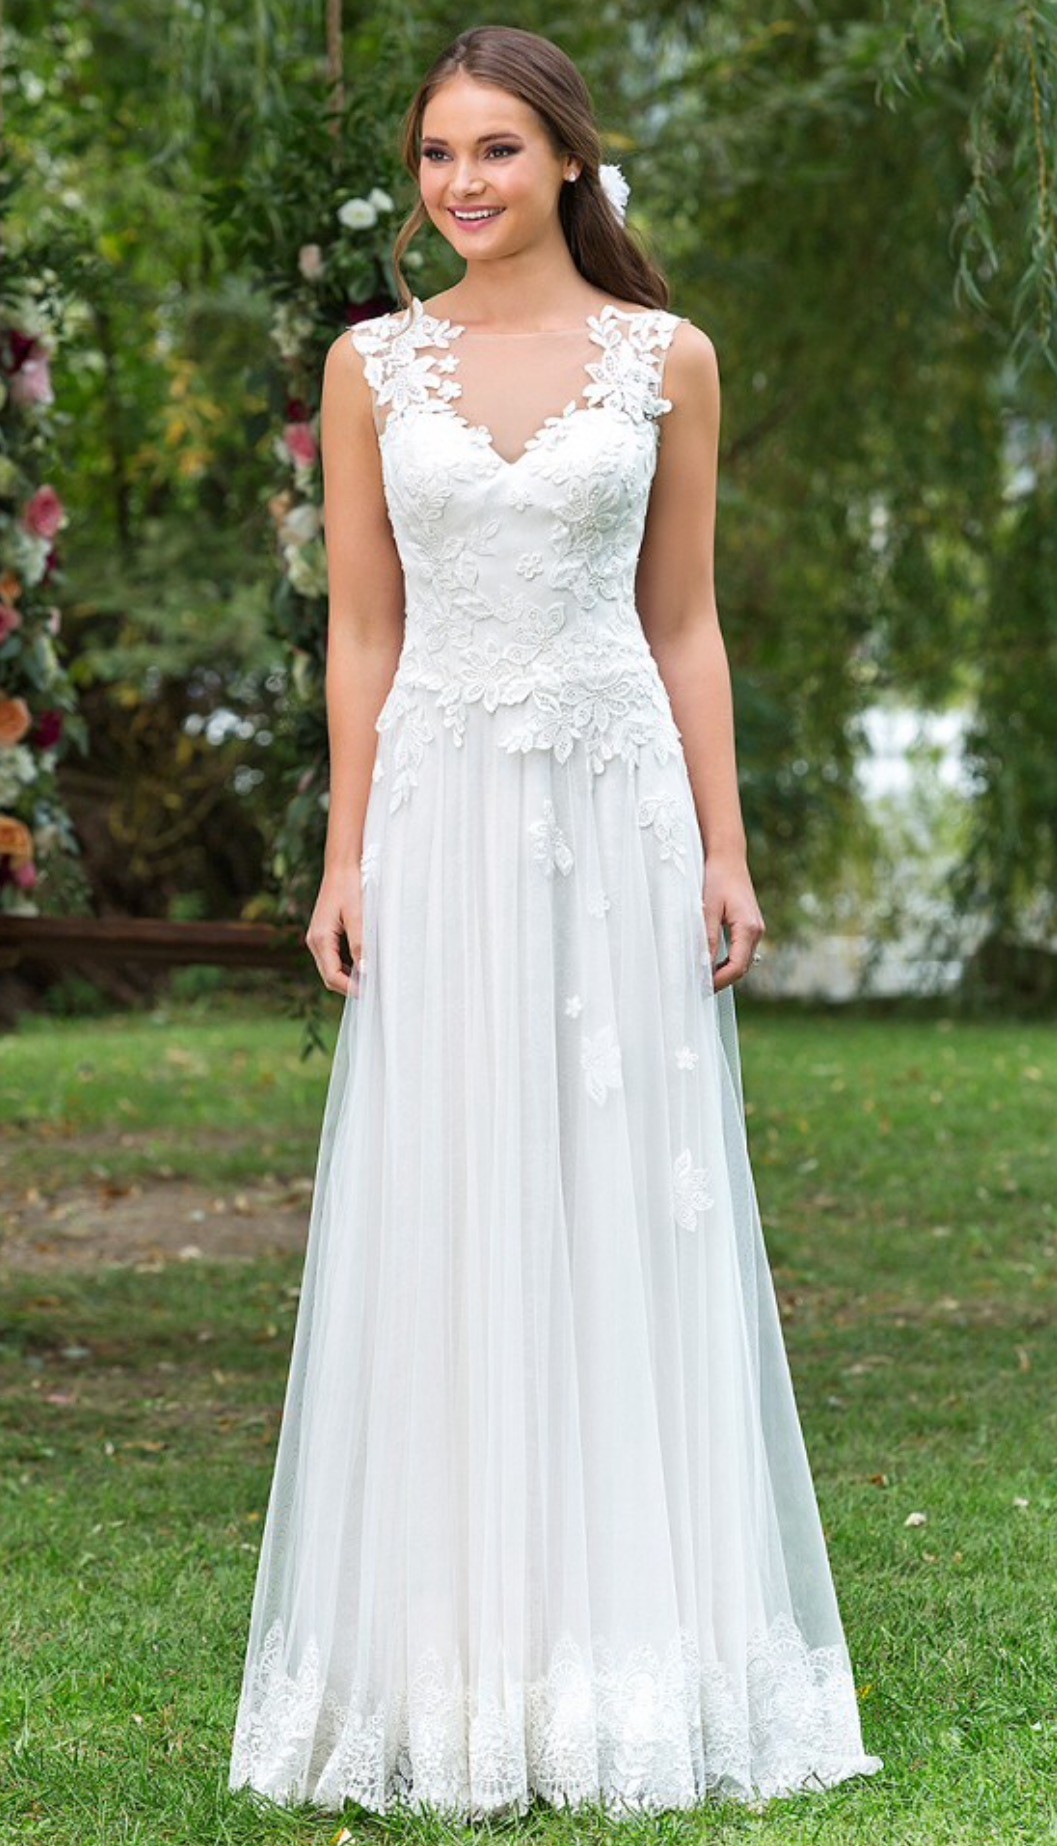 Sweetheart Gowns 6157 New Wedding Dress - Stillwhite